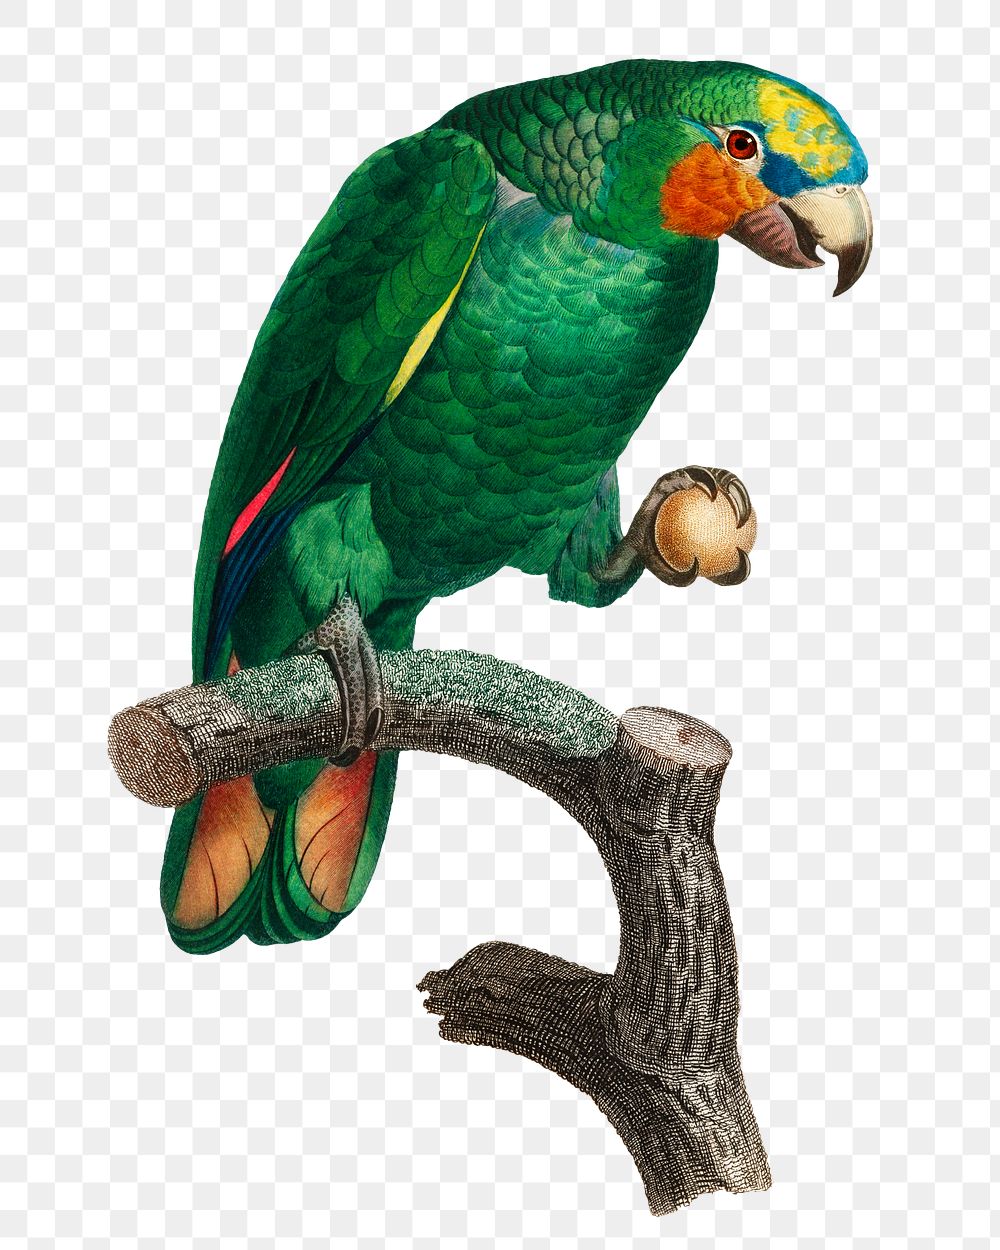 Orange-winged Amazon parrot png bird sticker, vintage animal illustration, transparent background